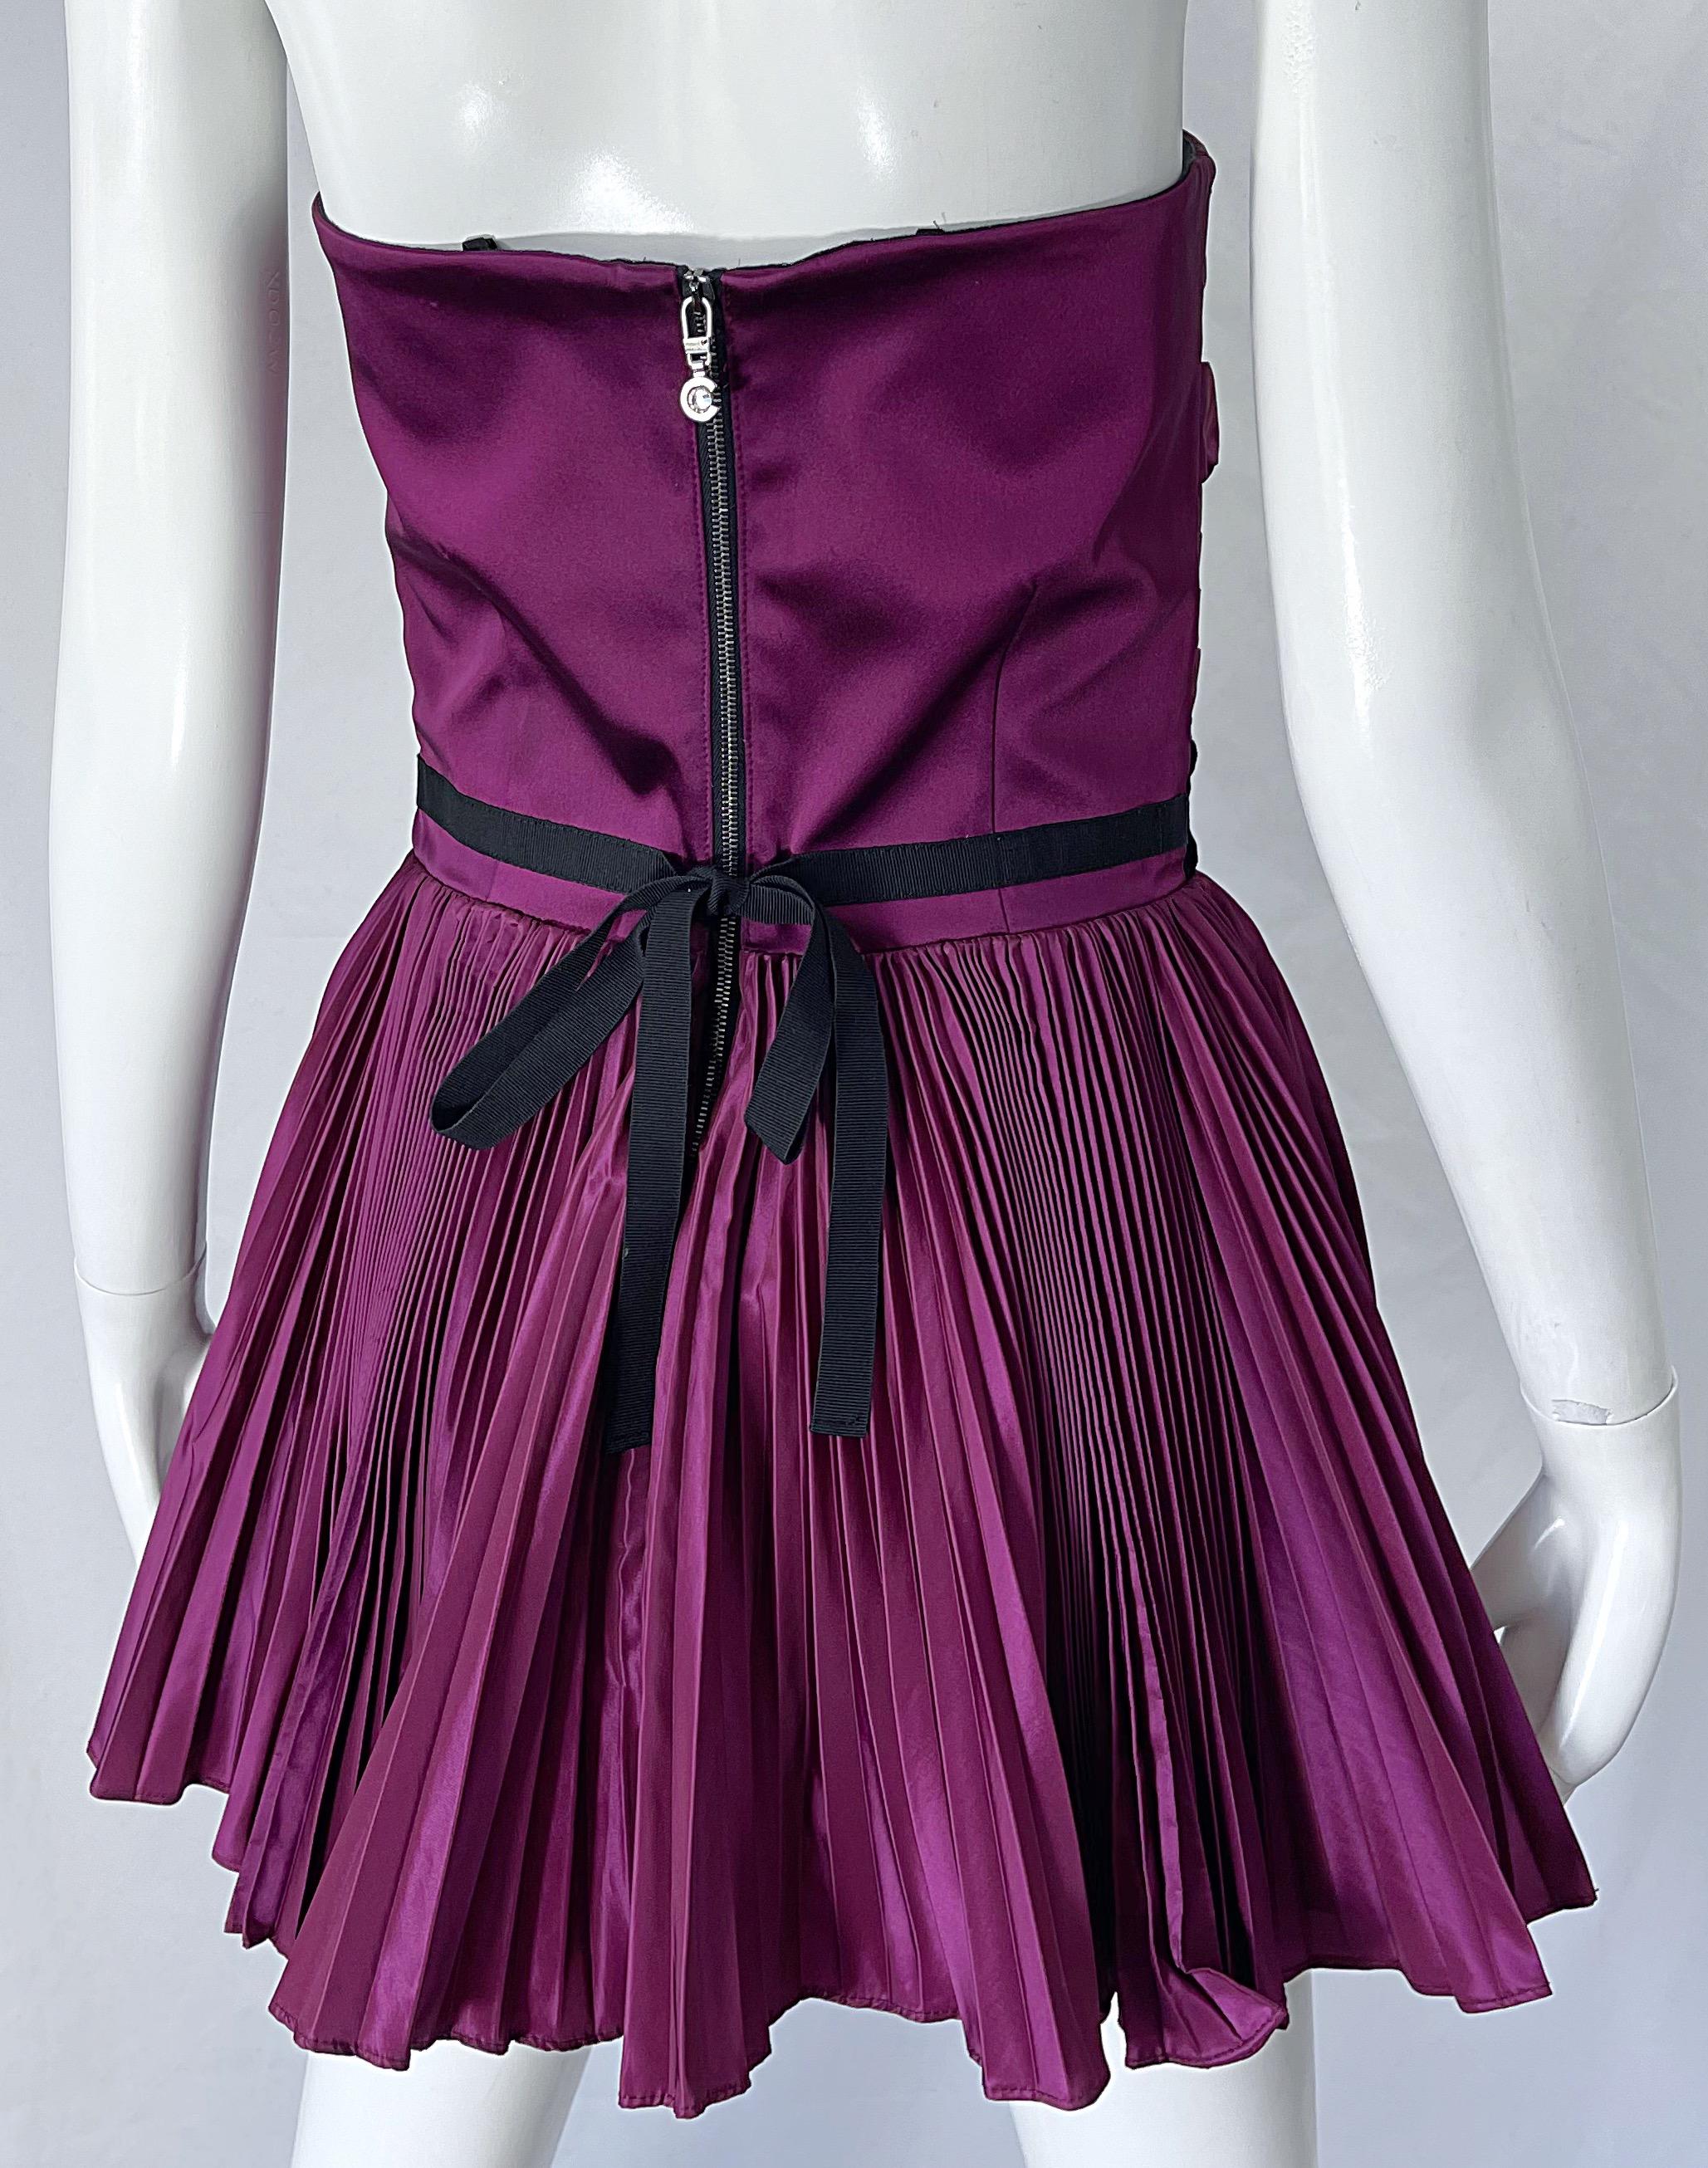 Yves Saint Laurent S/S 2012 Stefano Pilati Purple Silk Taffeta Mini Dress or Top For Sale 6